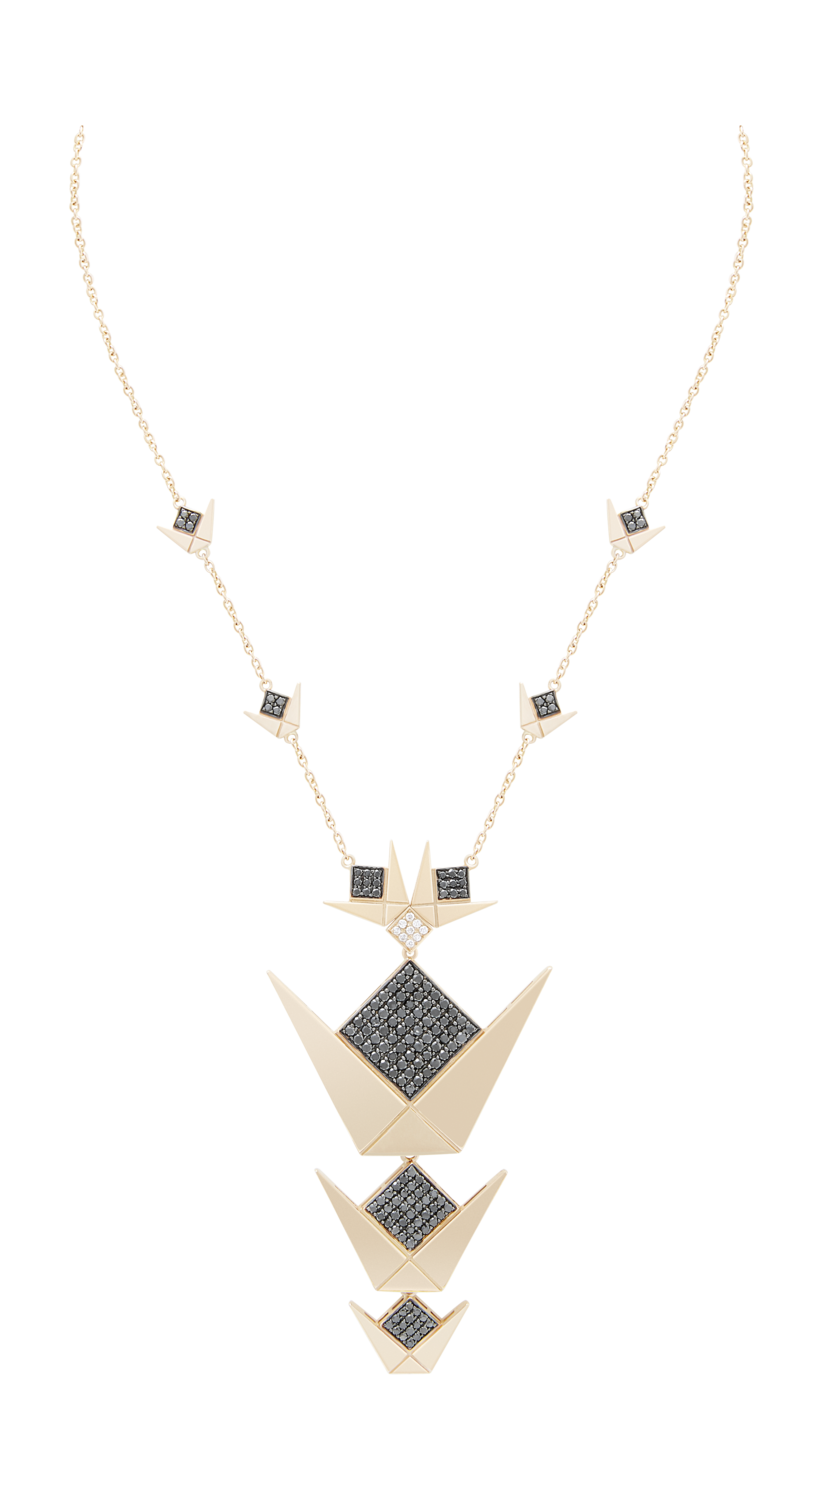 Emblem Diamond Necklace with Black Diamond